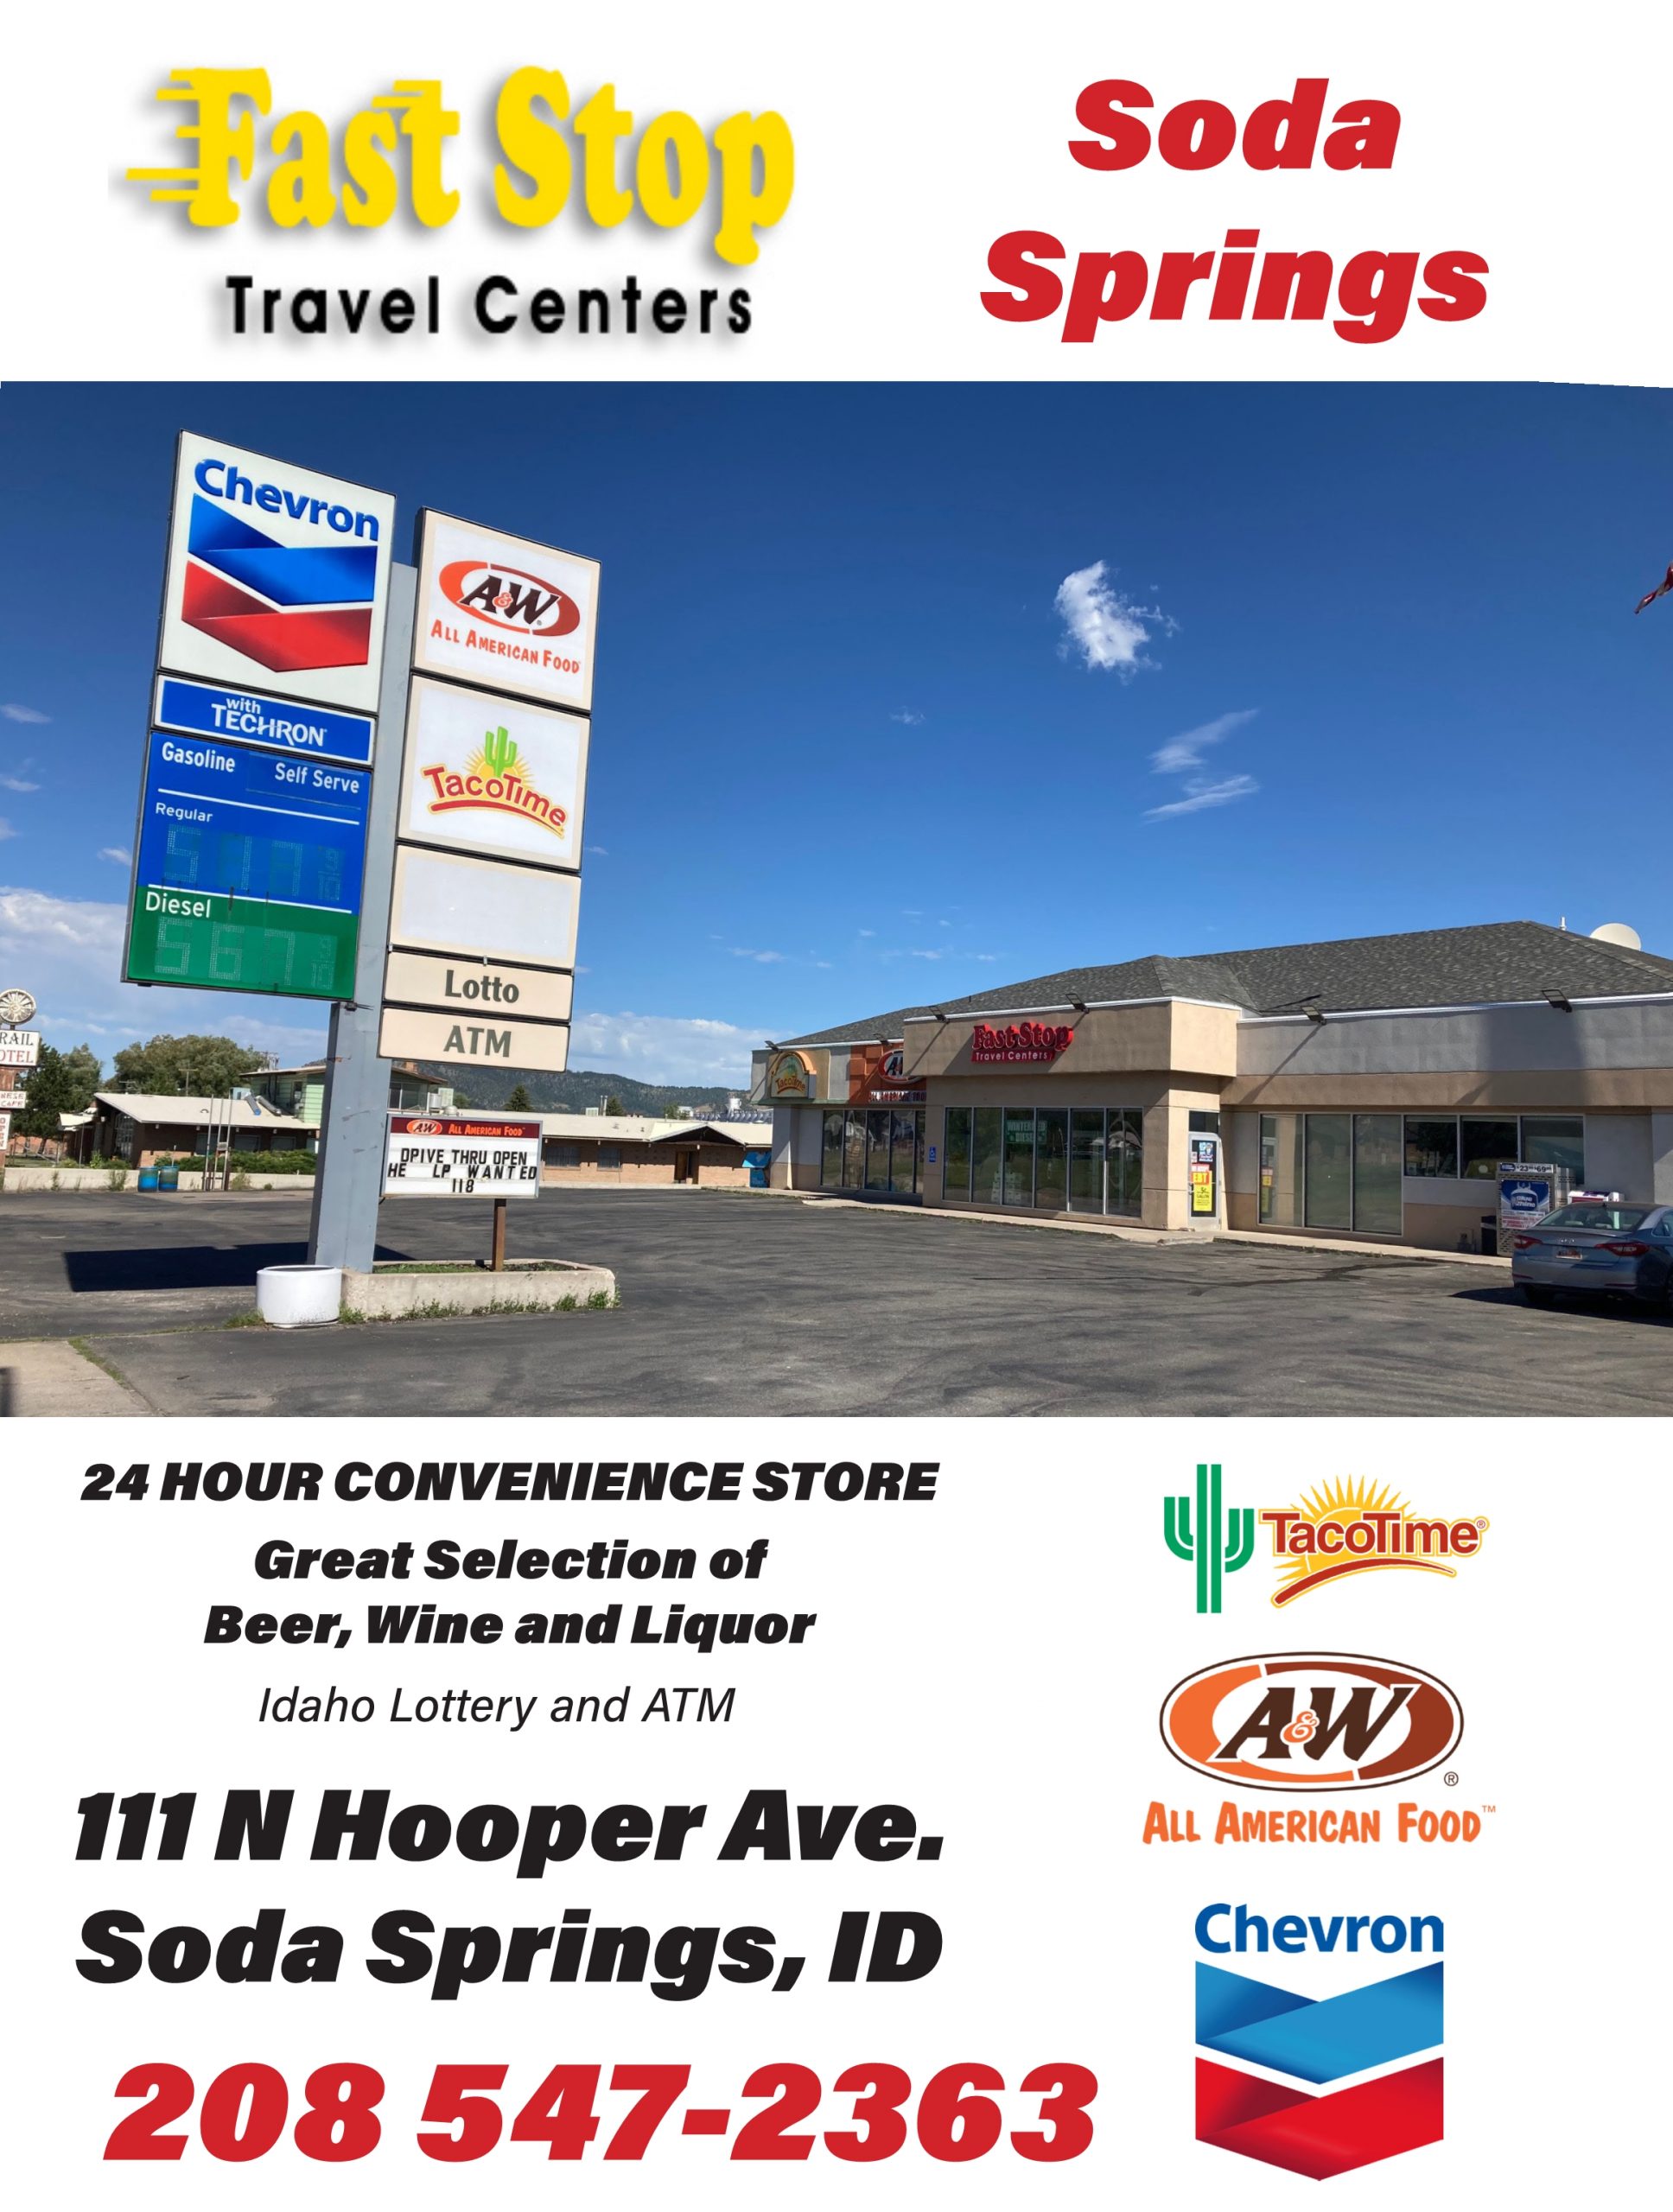 Fast Stop-Soda Springs Chevron - Discover Area Guides